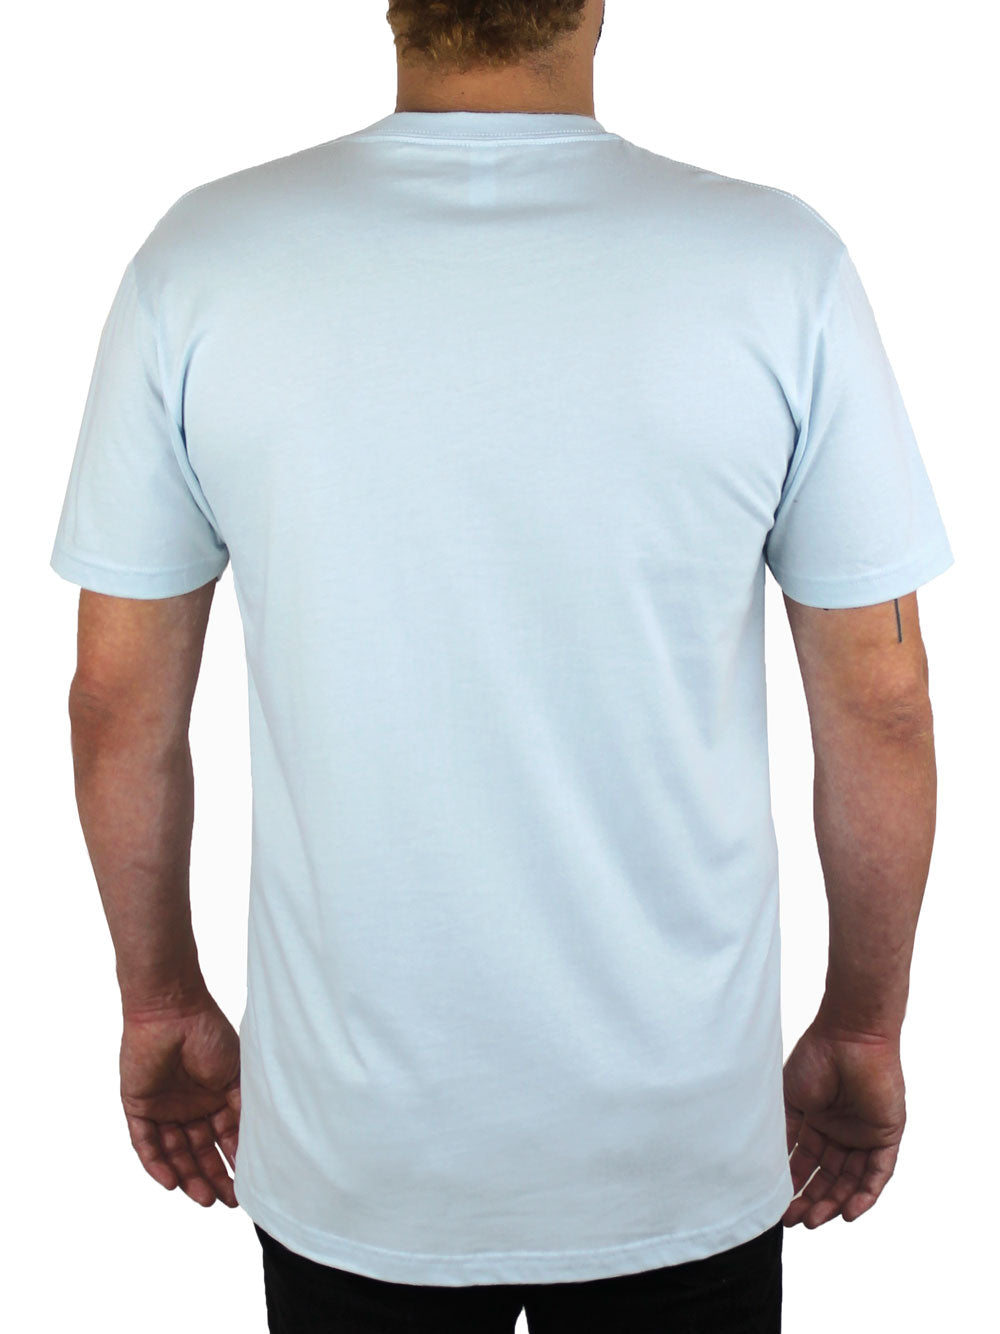 - Real Item - Nicaragua Knight Clothing Shirts Genius Chris Found Shirts T-Shirt Surf –